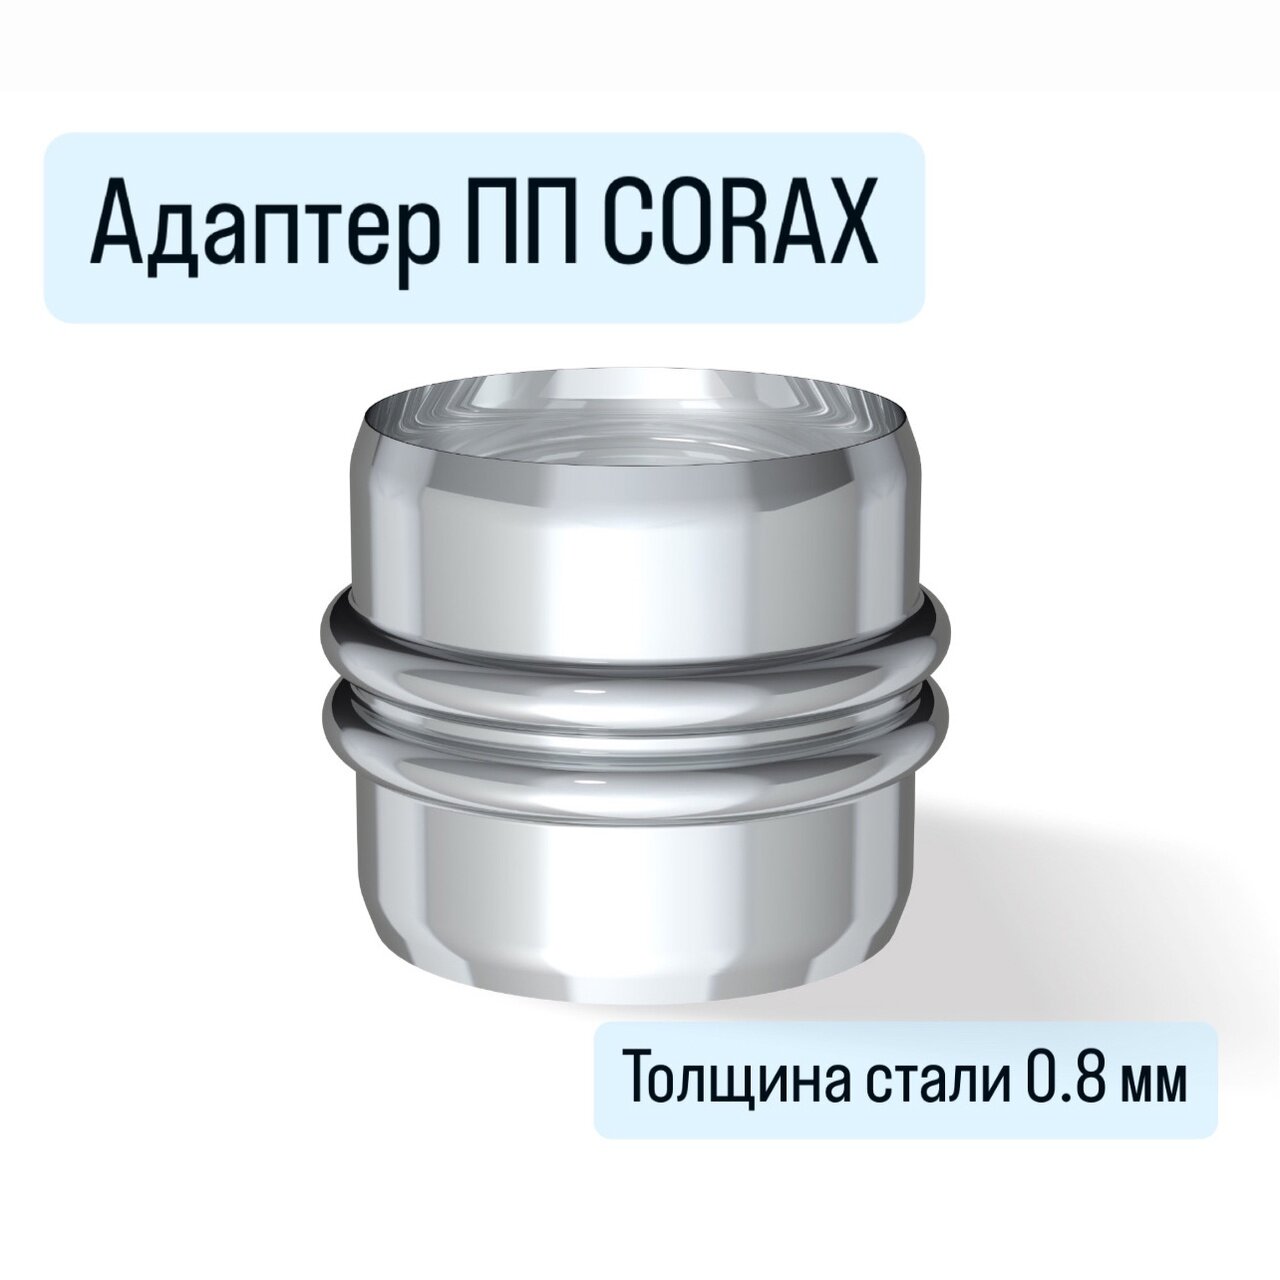 Адаптер ПП Ф120 (430/08) CORAX